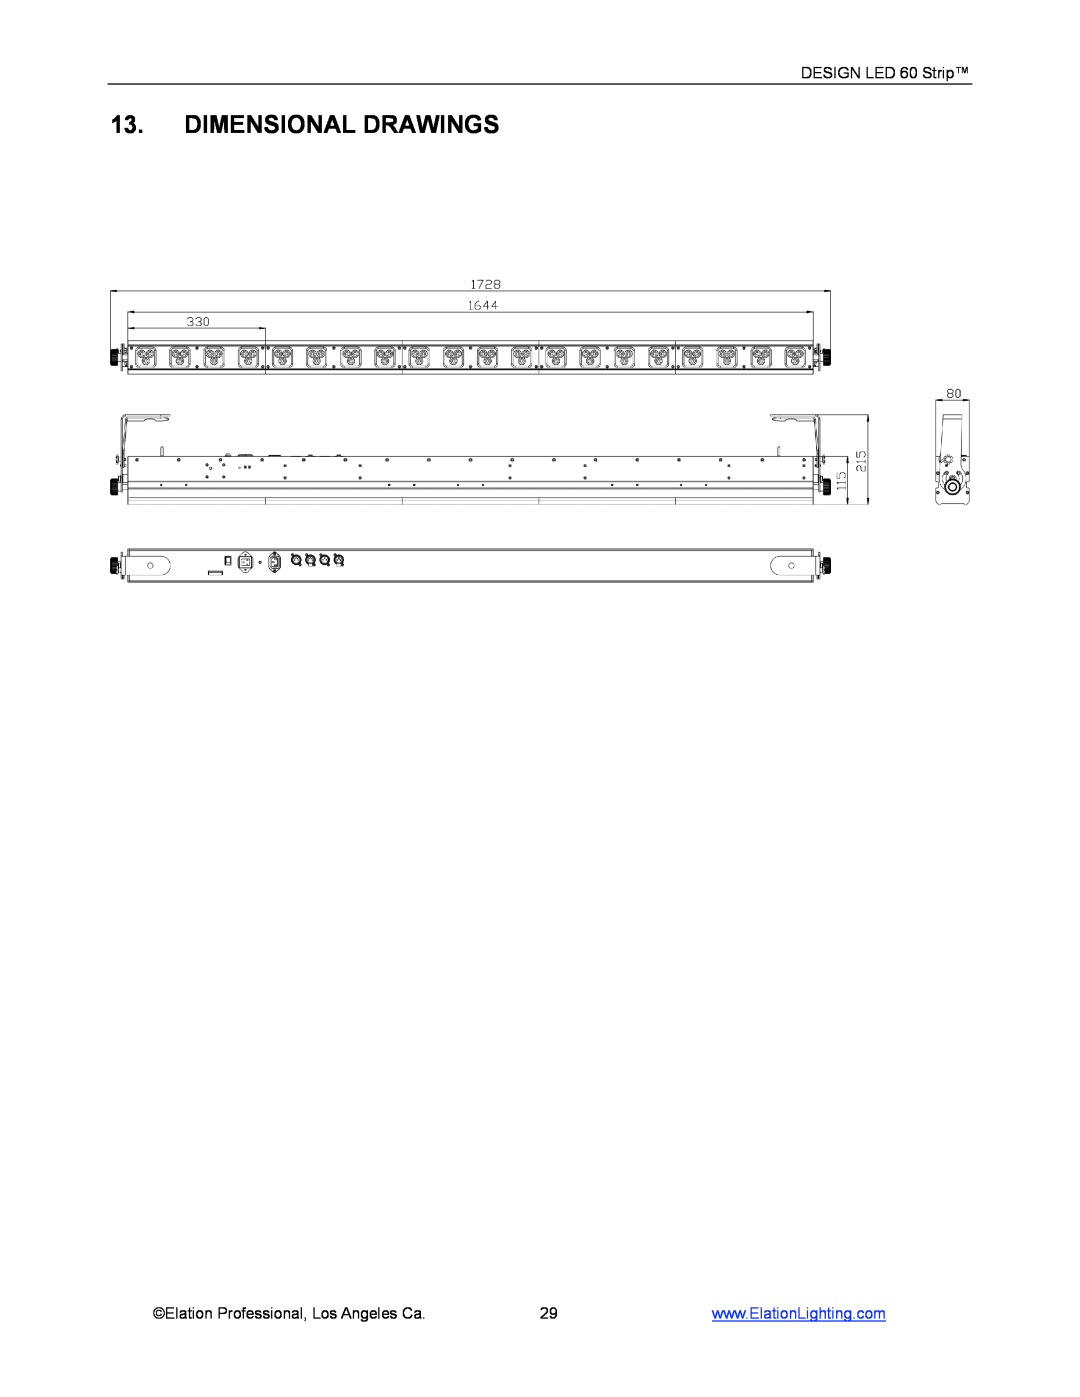 Elation Professional manual Dimensional Drawings, DESIGN LED 60 Strip, Elation Professional, Los Angeles Ca 